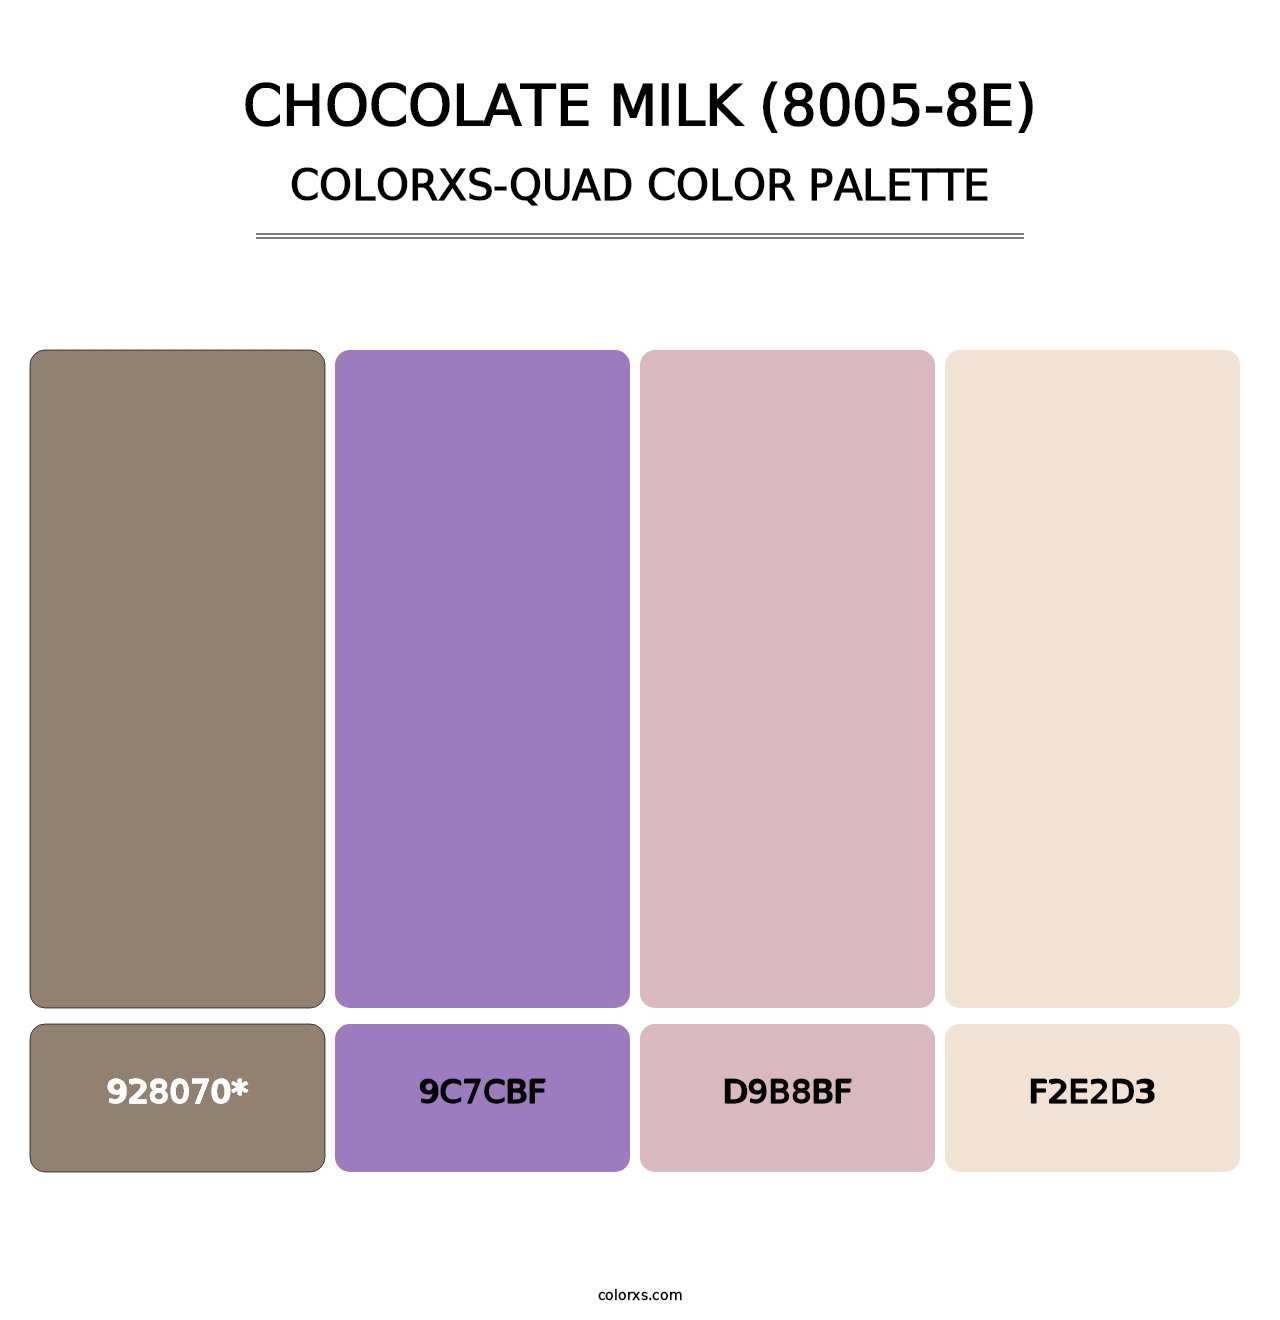 Chocolate Milk (8005-8E) - Colorxs Quad Palette